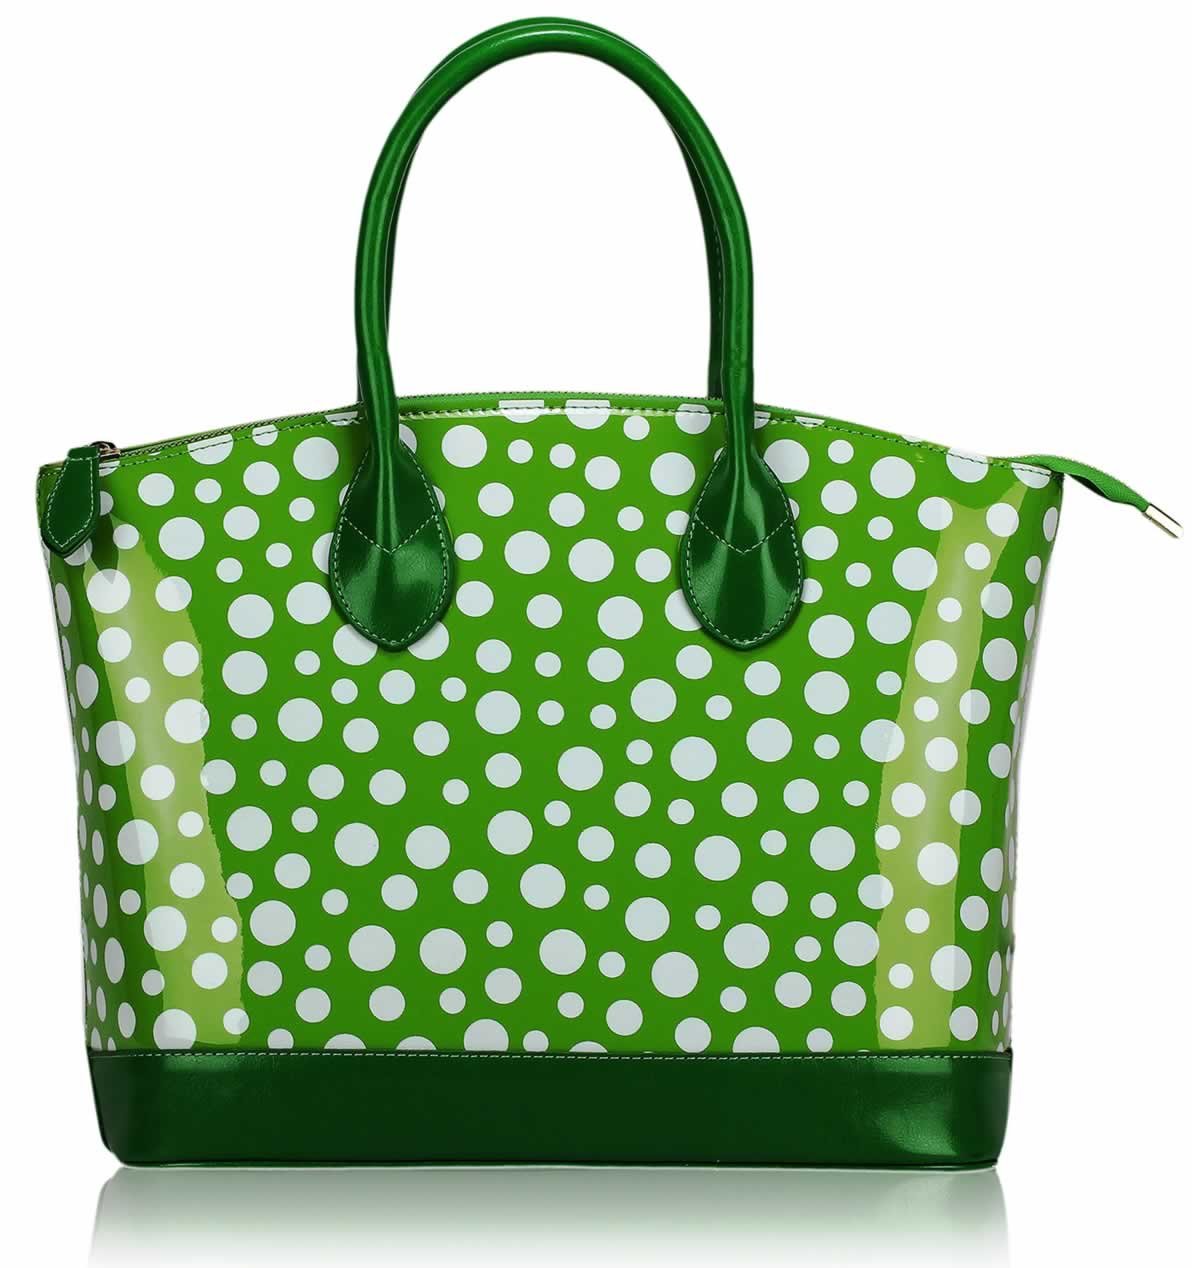 Wholesale Green Patent Polka Dot Tote Bag